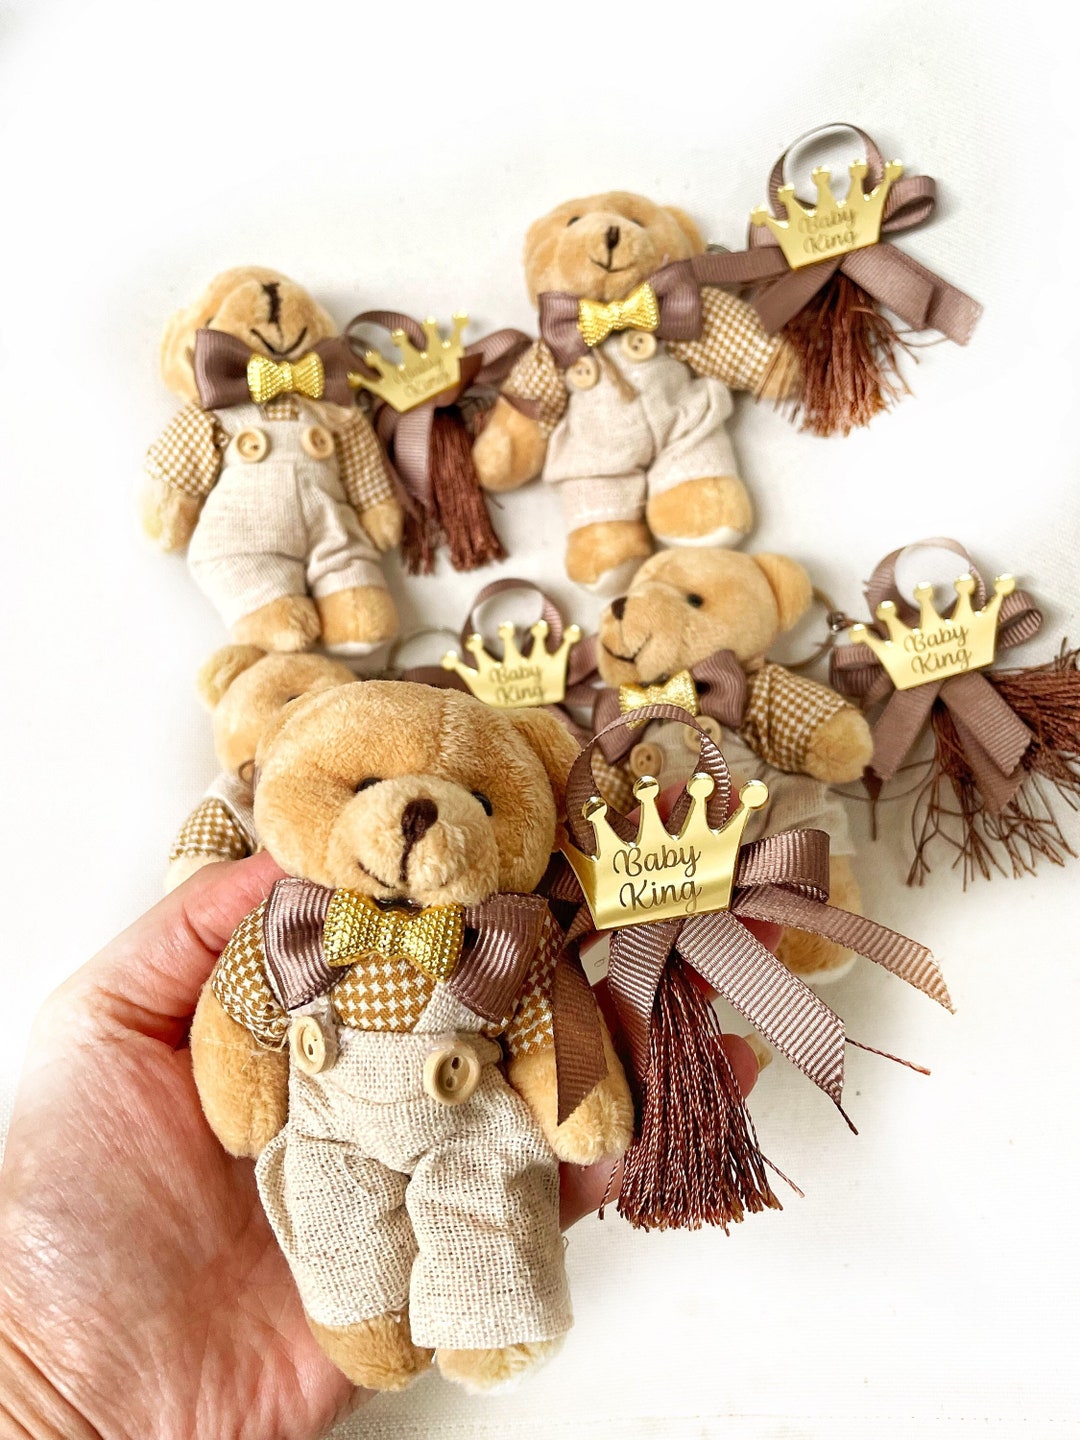 Custom Teddy Bear Keychain Personalized Gifts Birthday photo photo pic